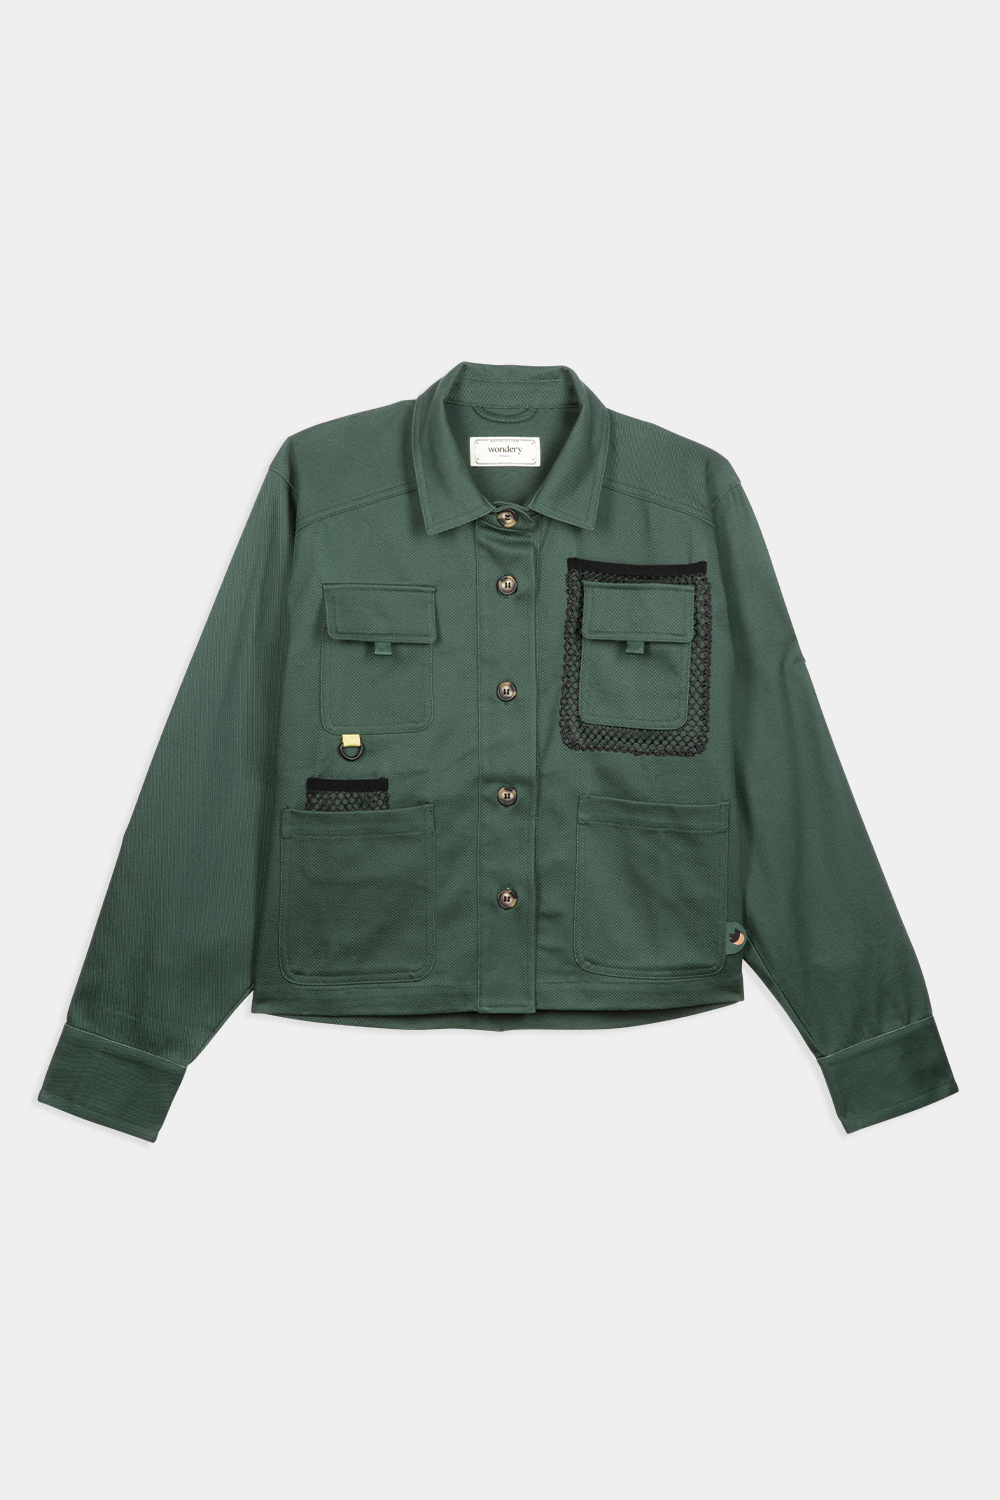 flat lay image of forest green denim 4-pocket long sleeve outdoor denim jacket